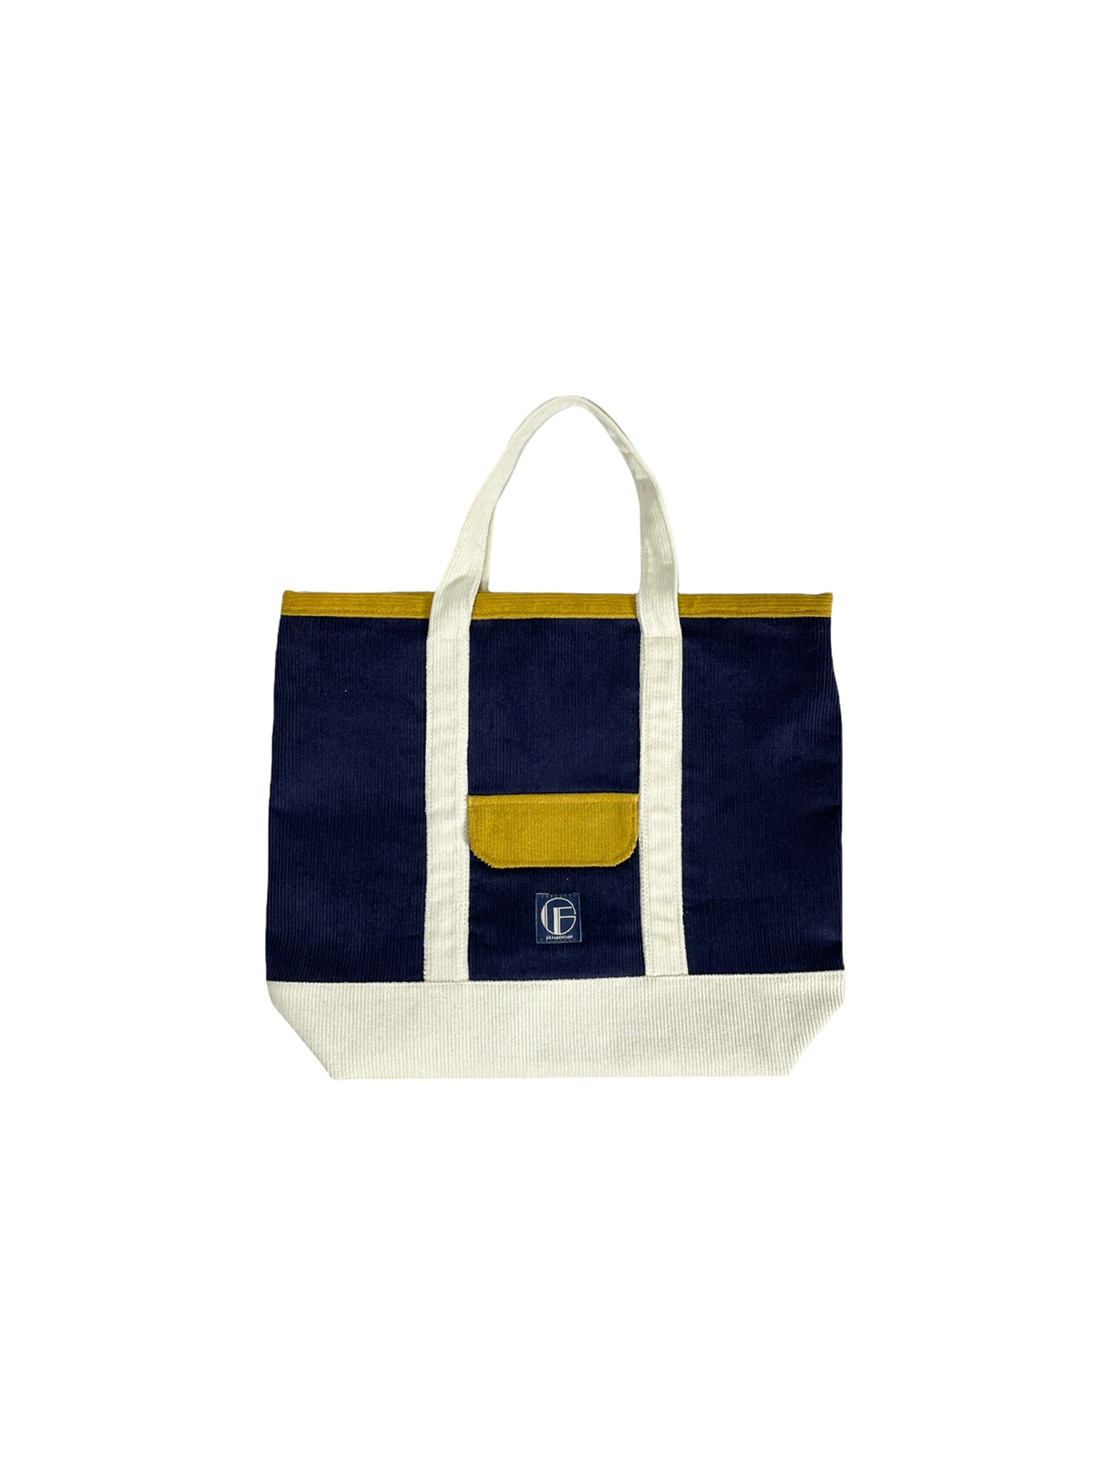 Corduroy Tote Bag (Navy-Gold)